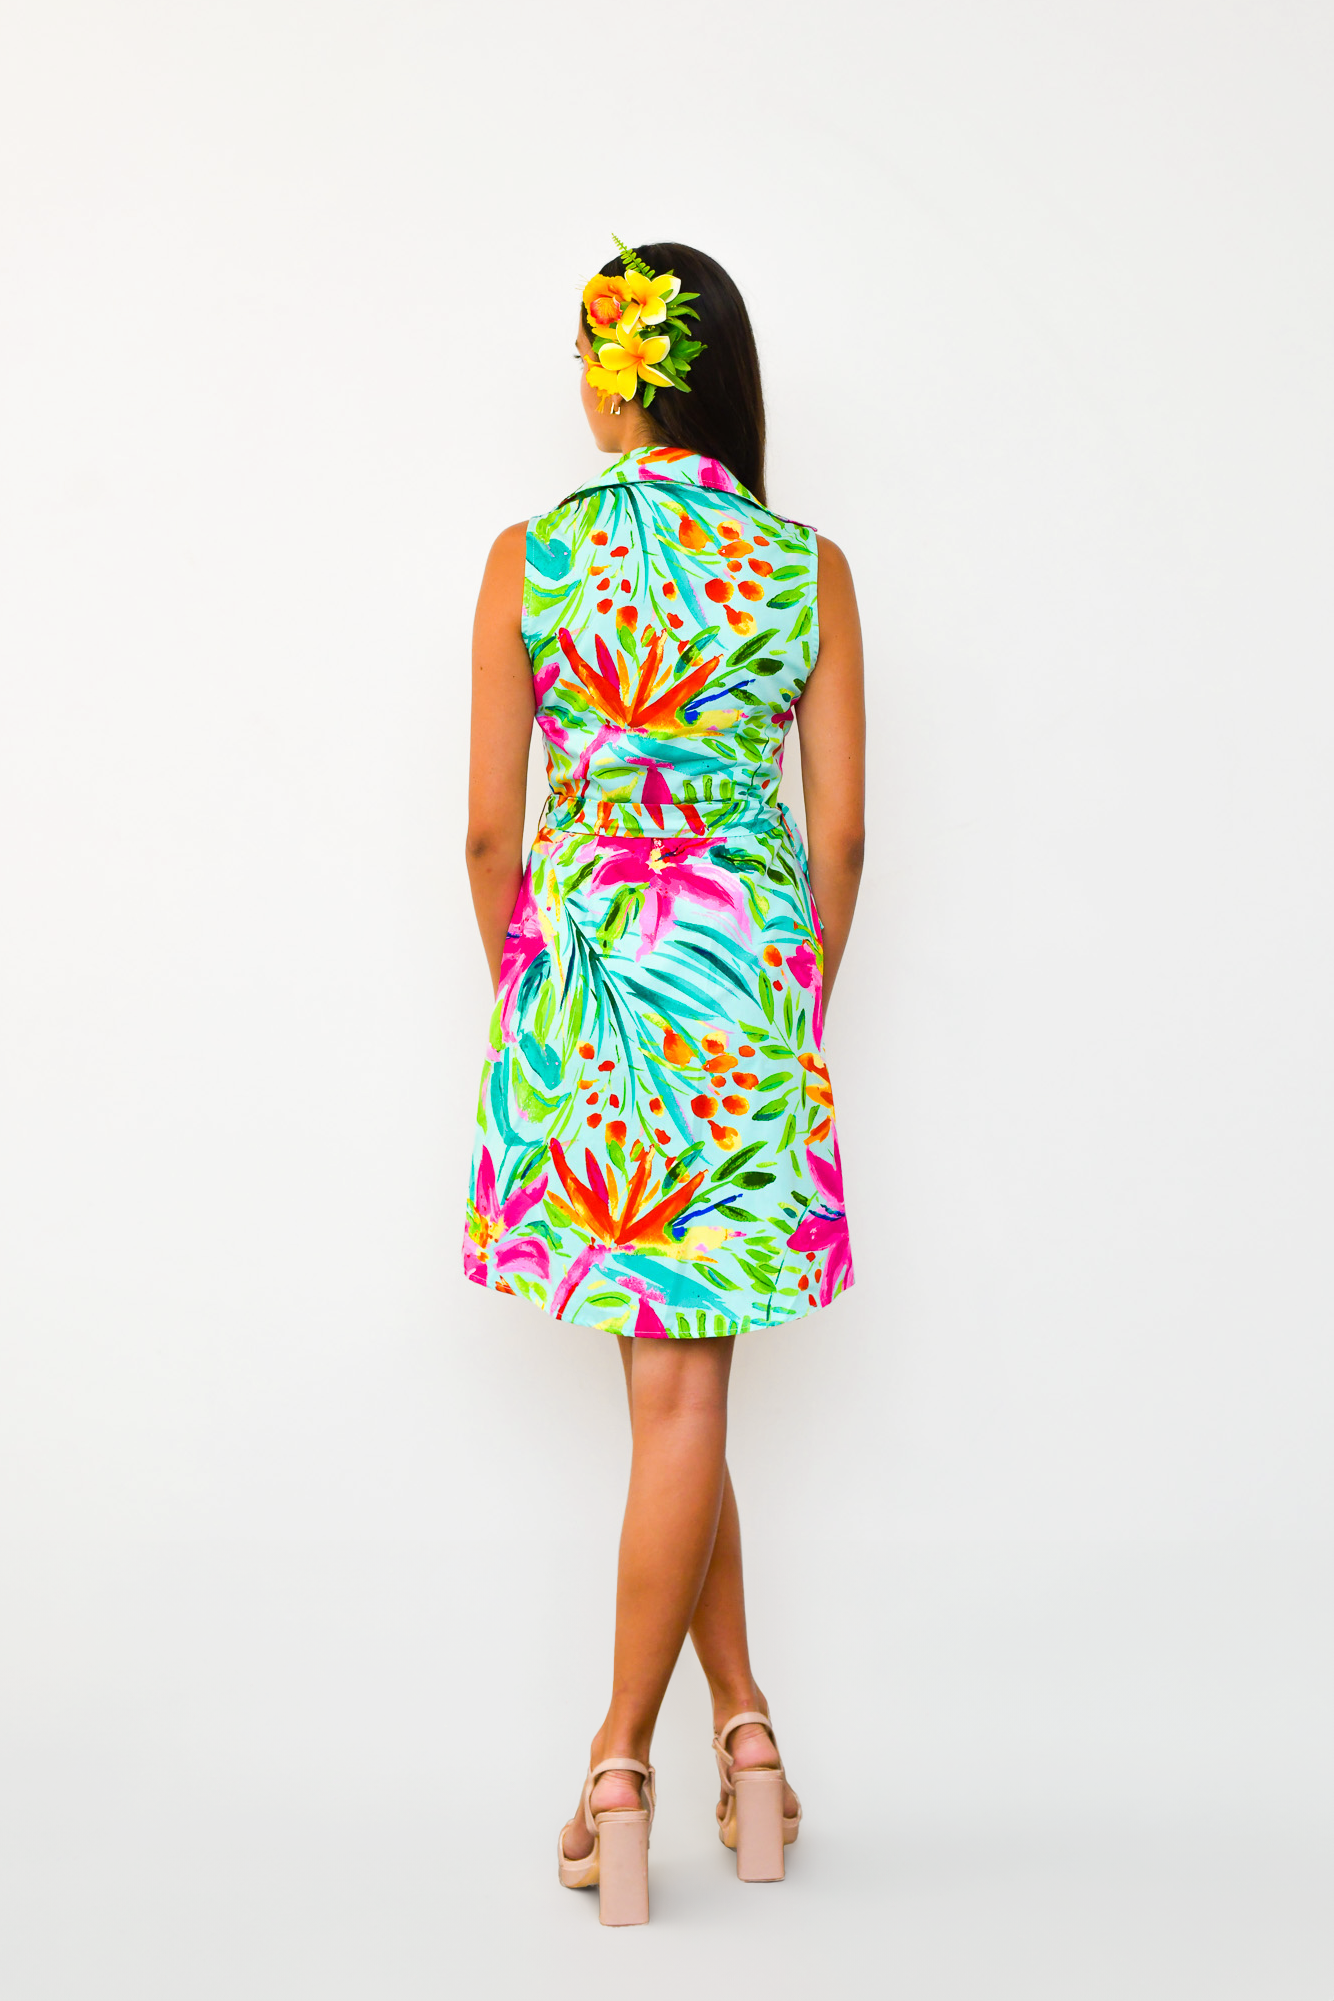 Tropicana - Kate Dress - Malia Fiji